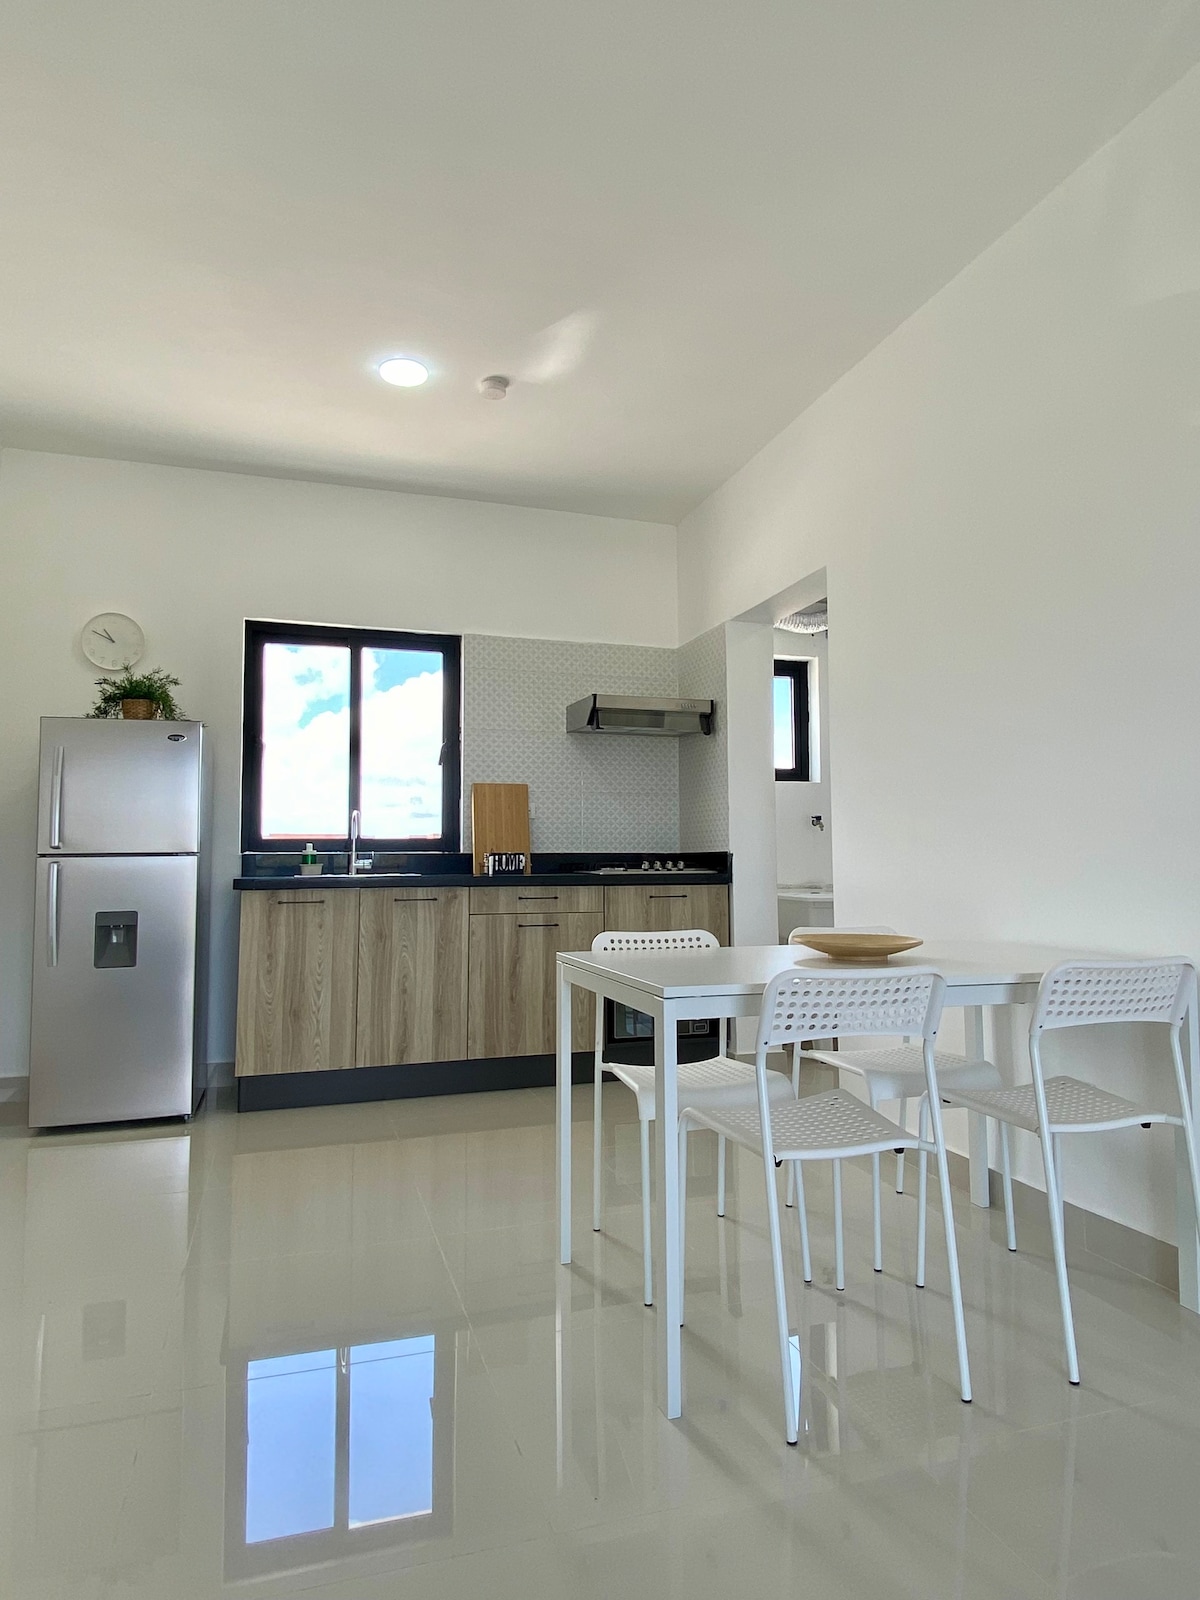 1A Apartamento completo 1 Habitación en Punta Cana